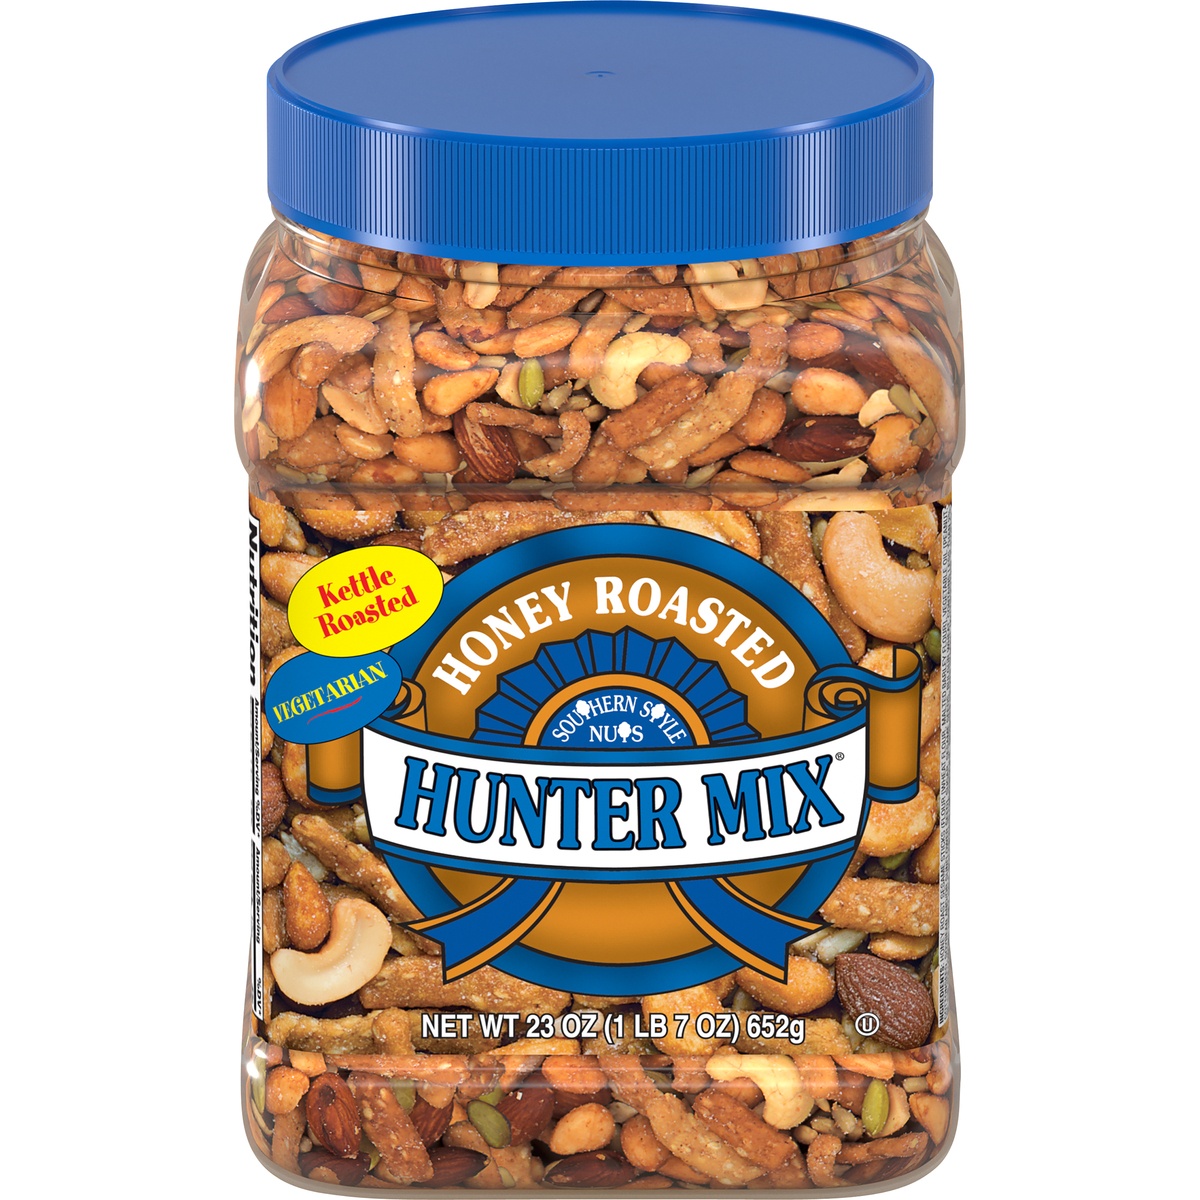 slide 1 of 1, Hunter Mix Southern Style Nuts Hunter Mix Mix Honey Roasted Nuts, 23 oz